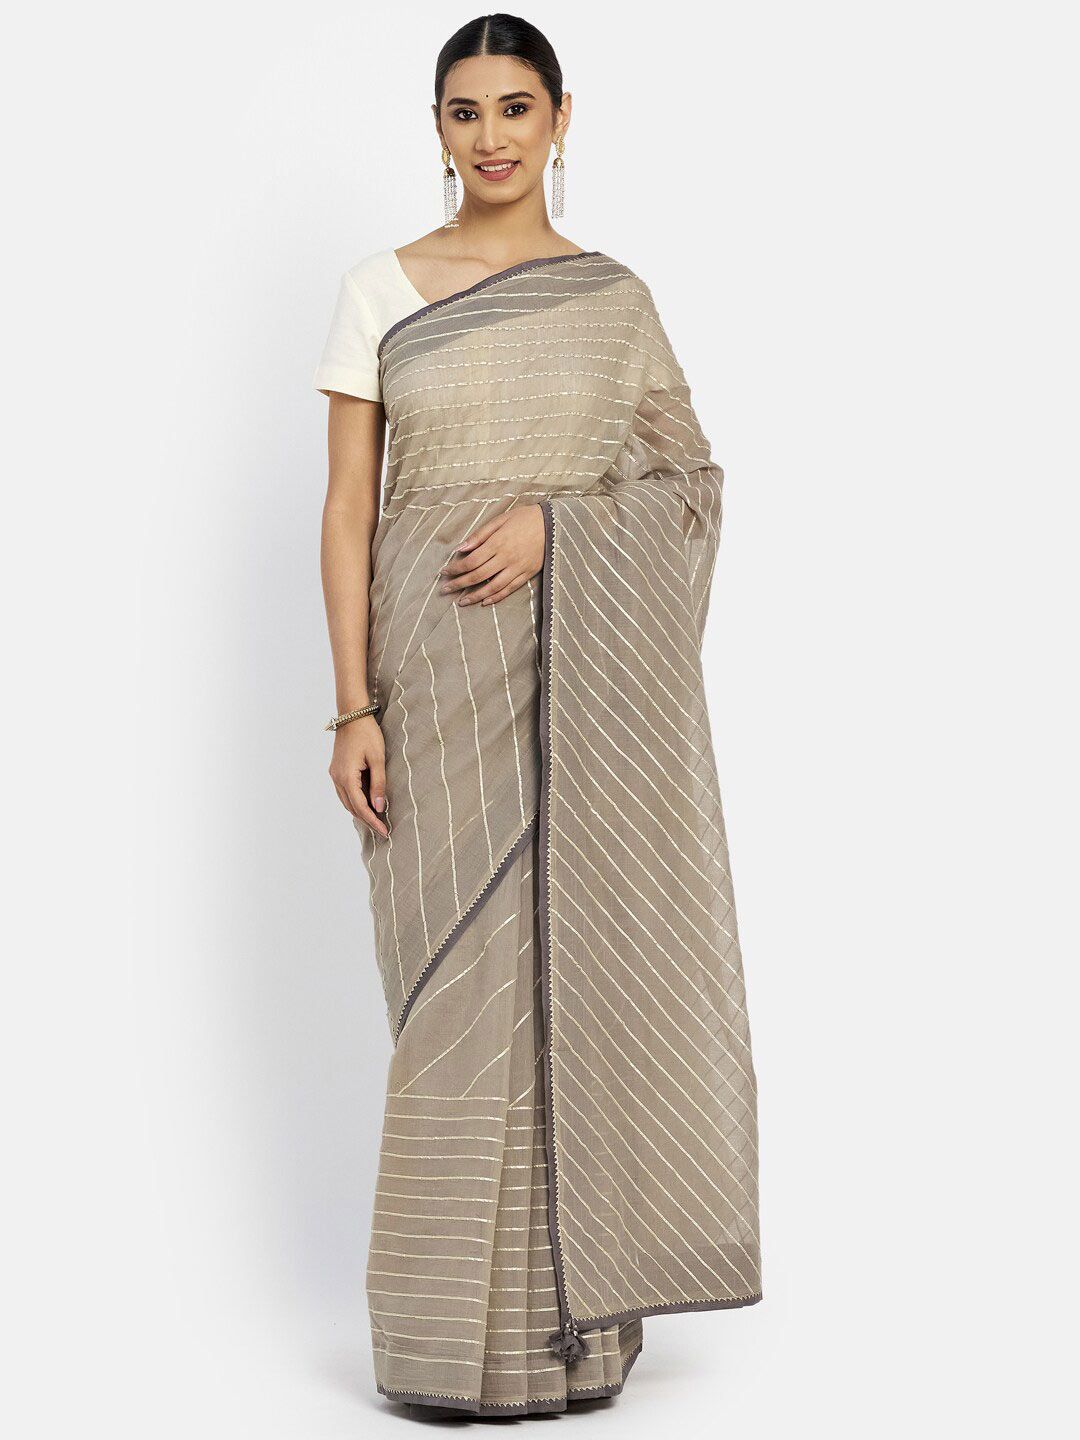 Fabindia Grey & Gold-Toned Striped Ready to Wear Saree Price in India